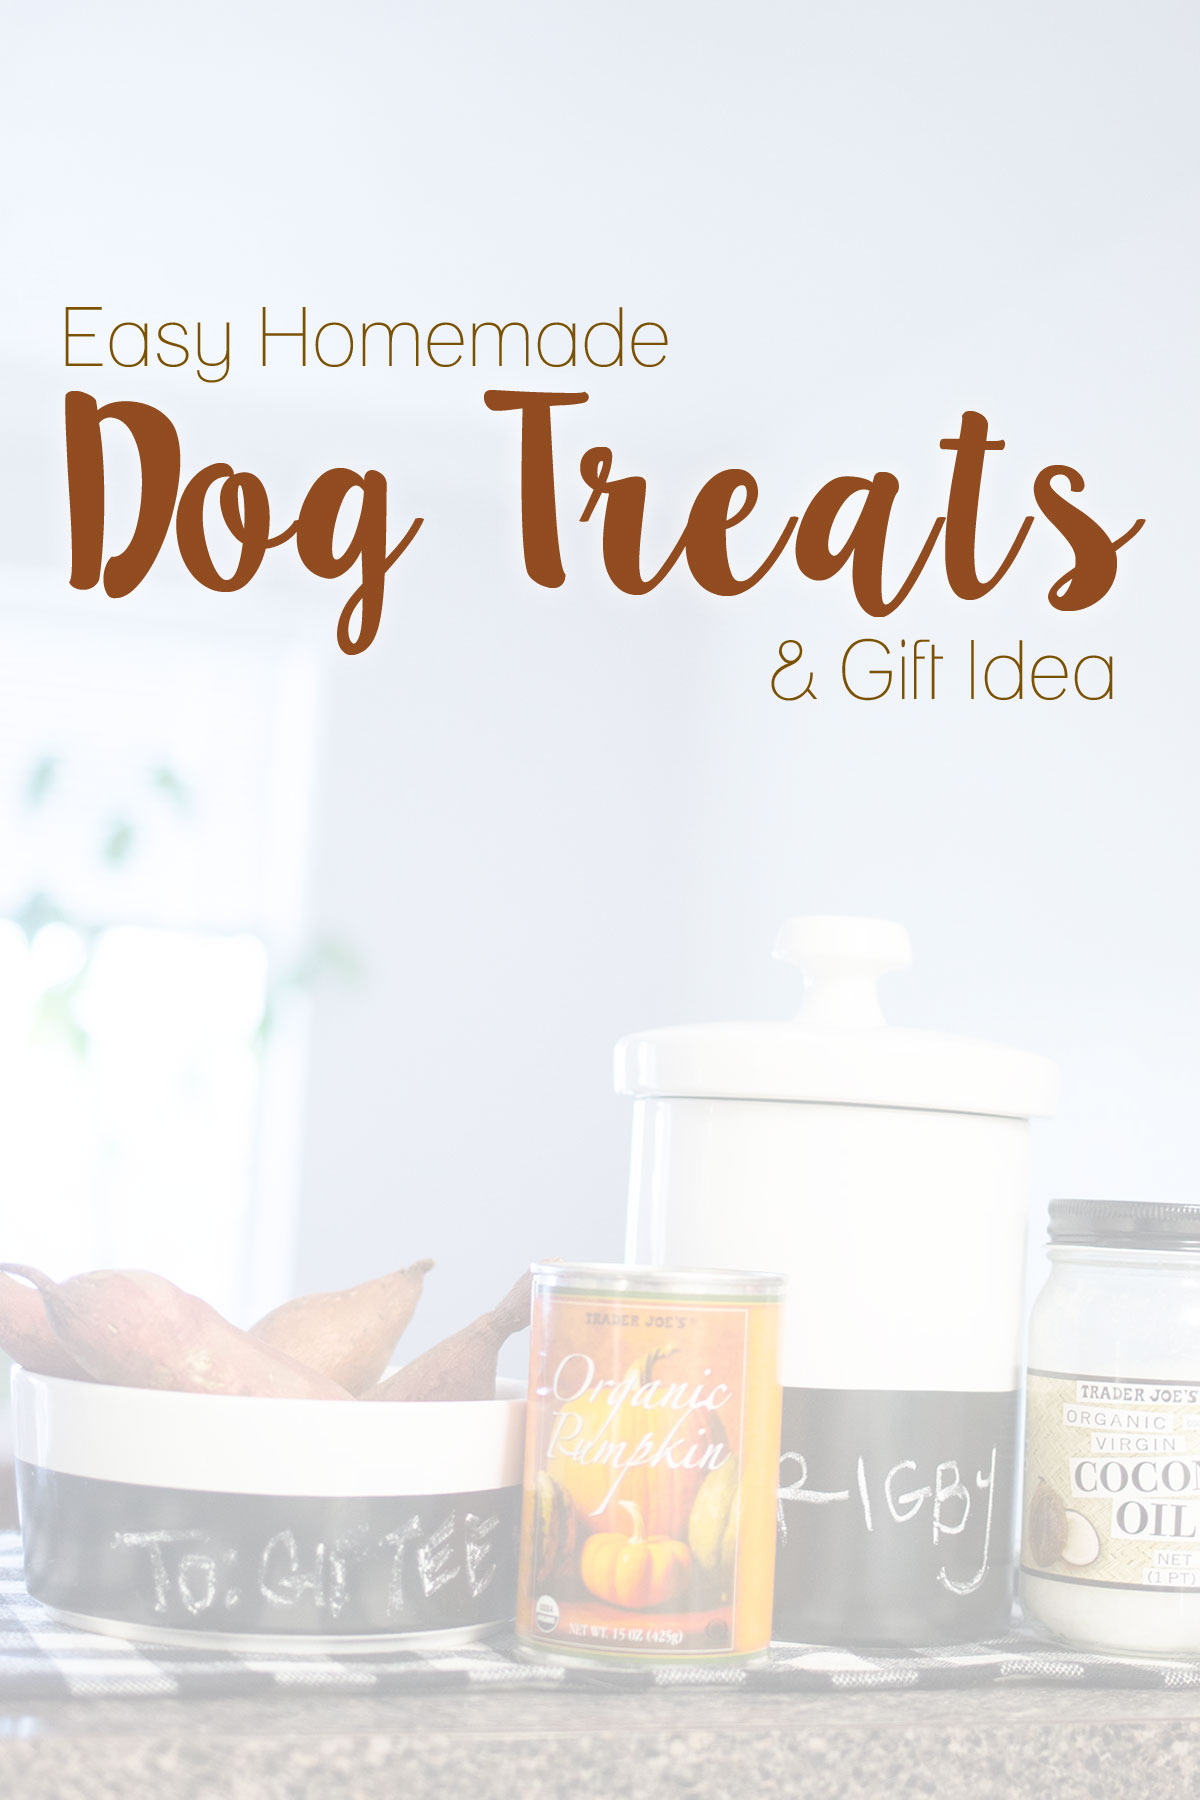 https://www.hellorigby.com/wp-content/uploads/2015/12/easy-homemade-dog-treats-holiday-gift-idea.jpg